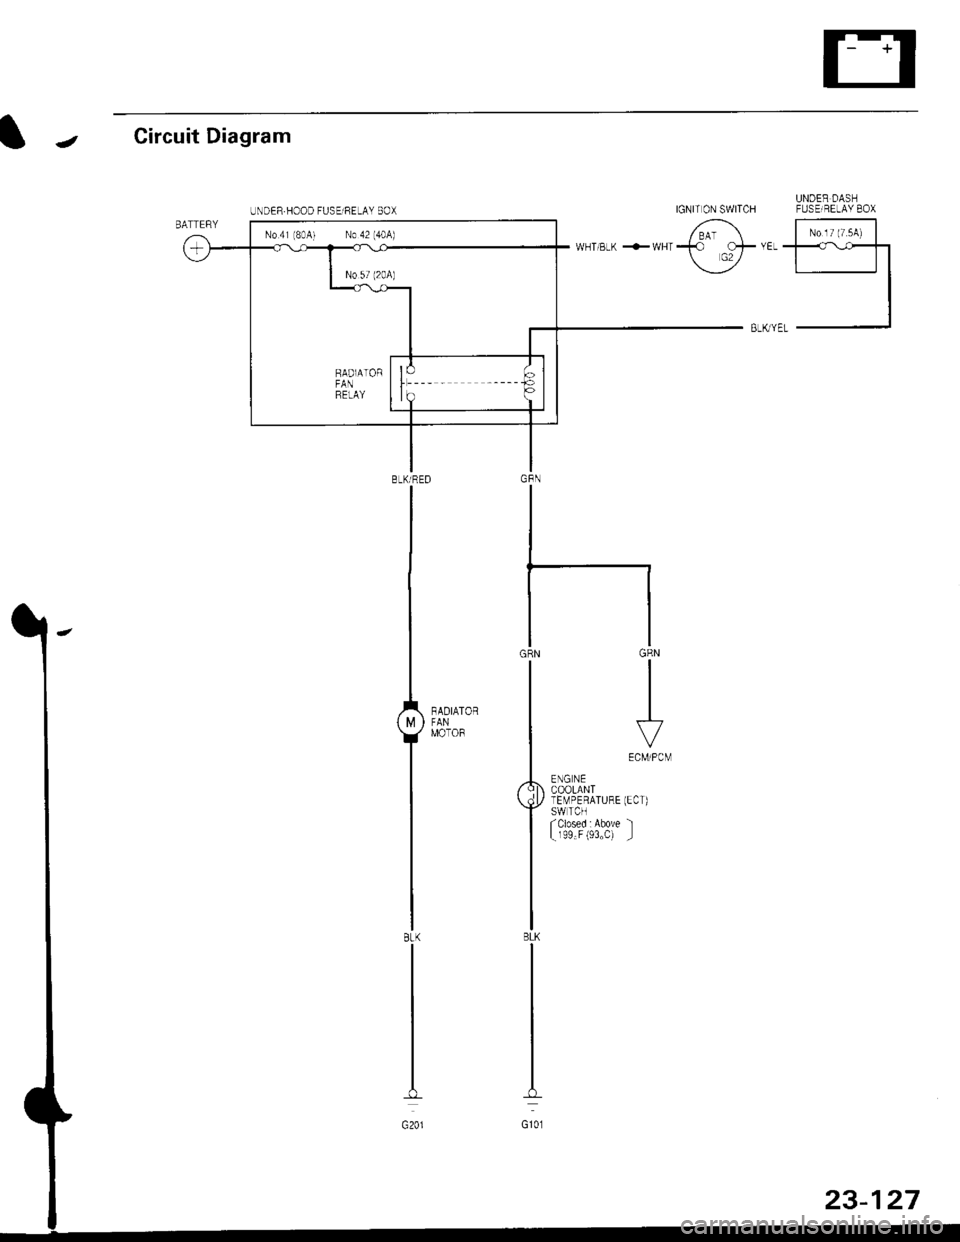 HONDA CIVIC 1997 6.G Workshop Manual IJCircuit Diagram
UNDER DASHIGNIT ON SWITCH FUSEIRELAY 8OX
6 |-;;;;lii "ir"t*Tl-l
BLK yEL -J
GRN
III
I
\.7VECM/PCM
ENG NECOOLANTlEMPERATURE (ECT)SWTCHfclosed : Above l
L r99"F (93"C) _l
BLKTRED
I
I
